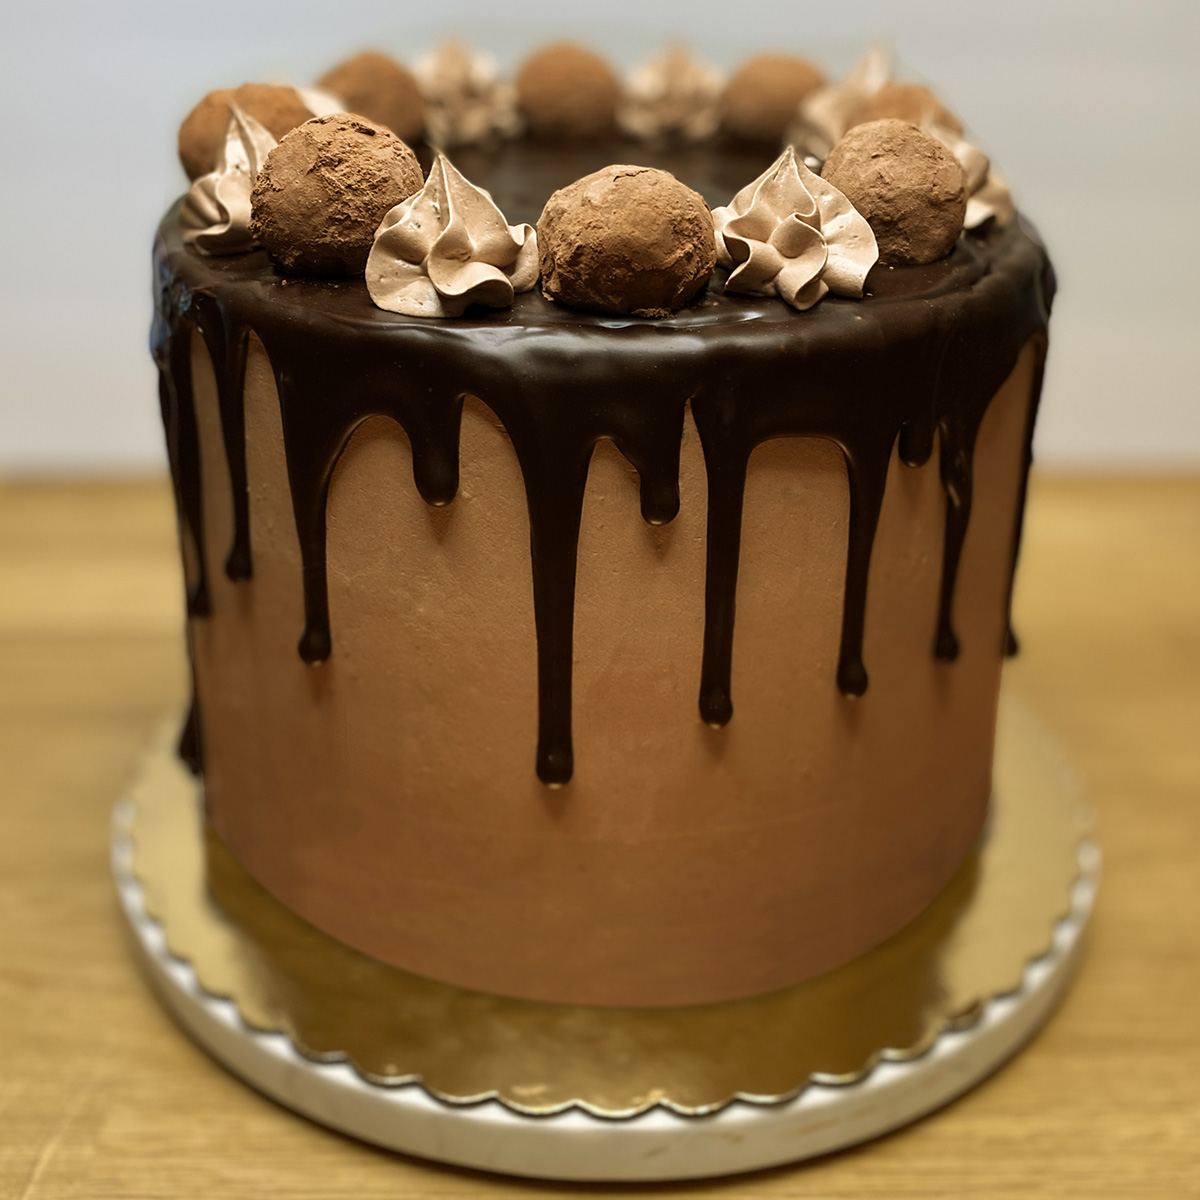 Chocolate Overlord Cake – Dave’s Sugar Rush Bakery